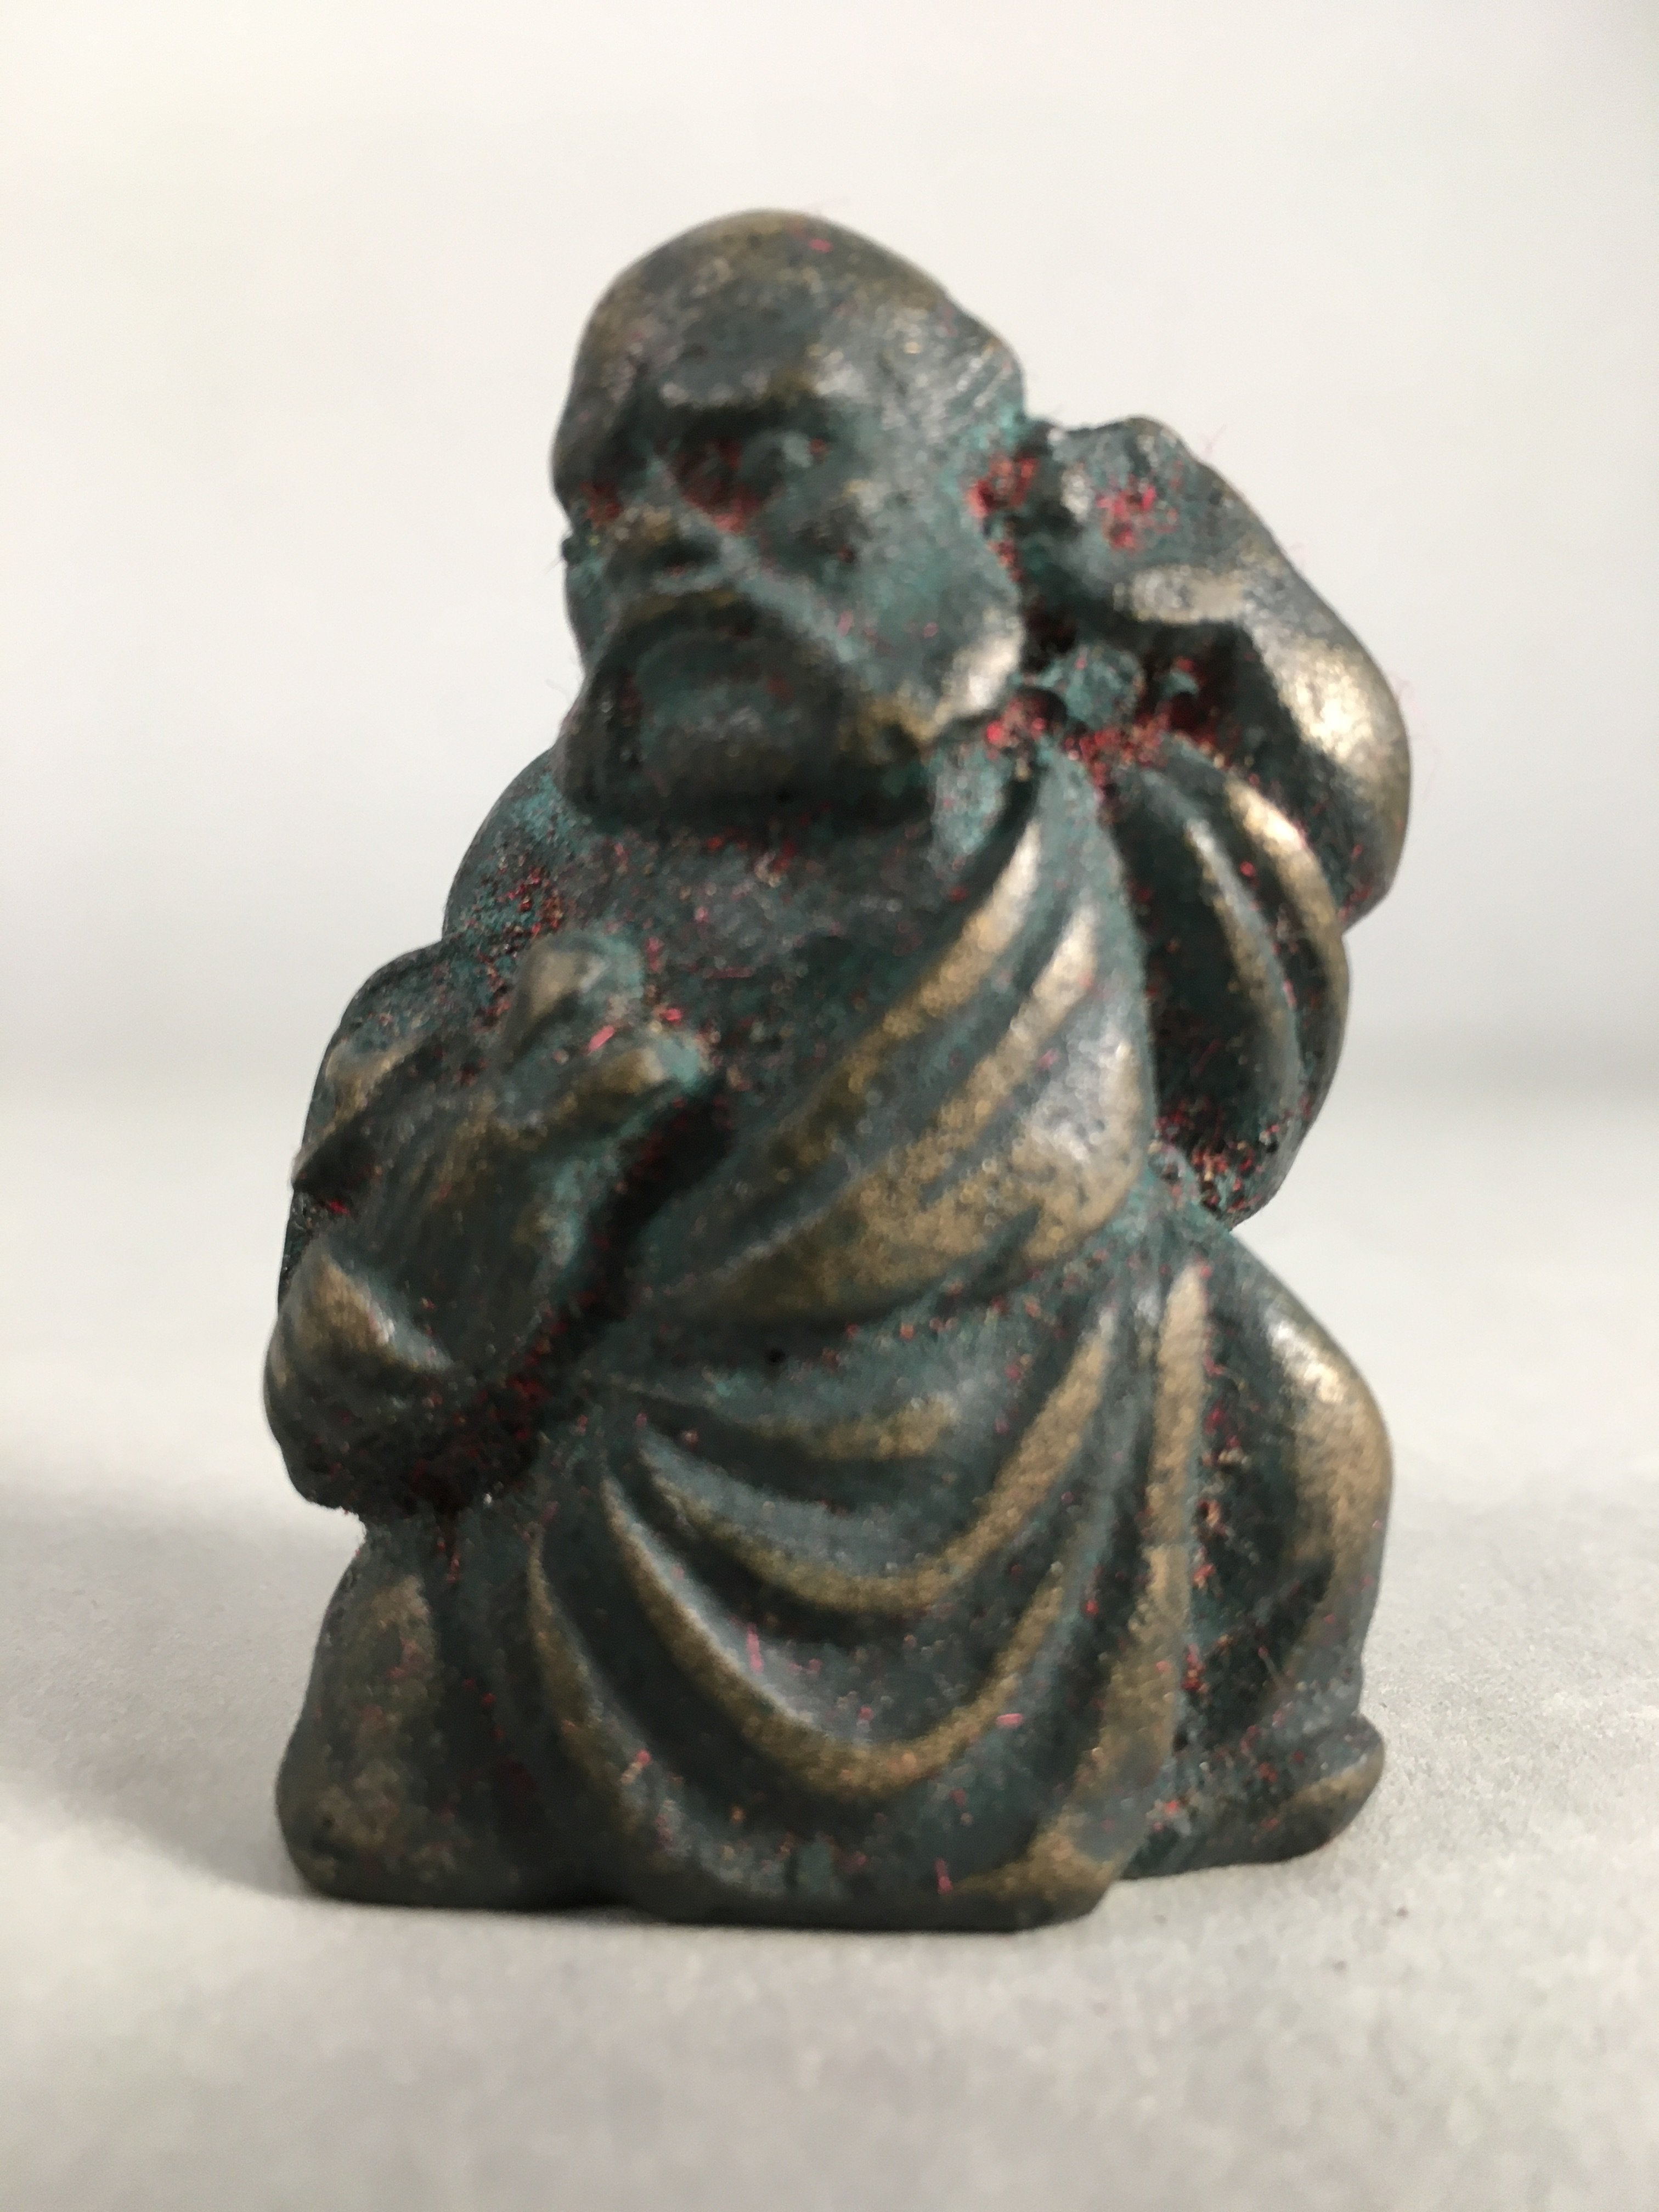 Chinese Iron Figurine Vtg Buddhist Monk Metal Okimono Statue KF434